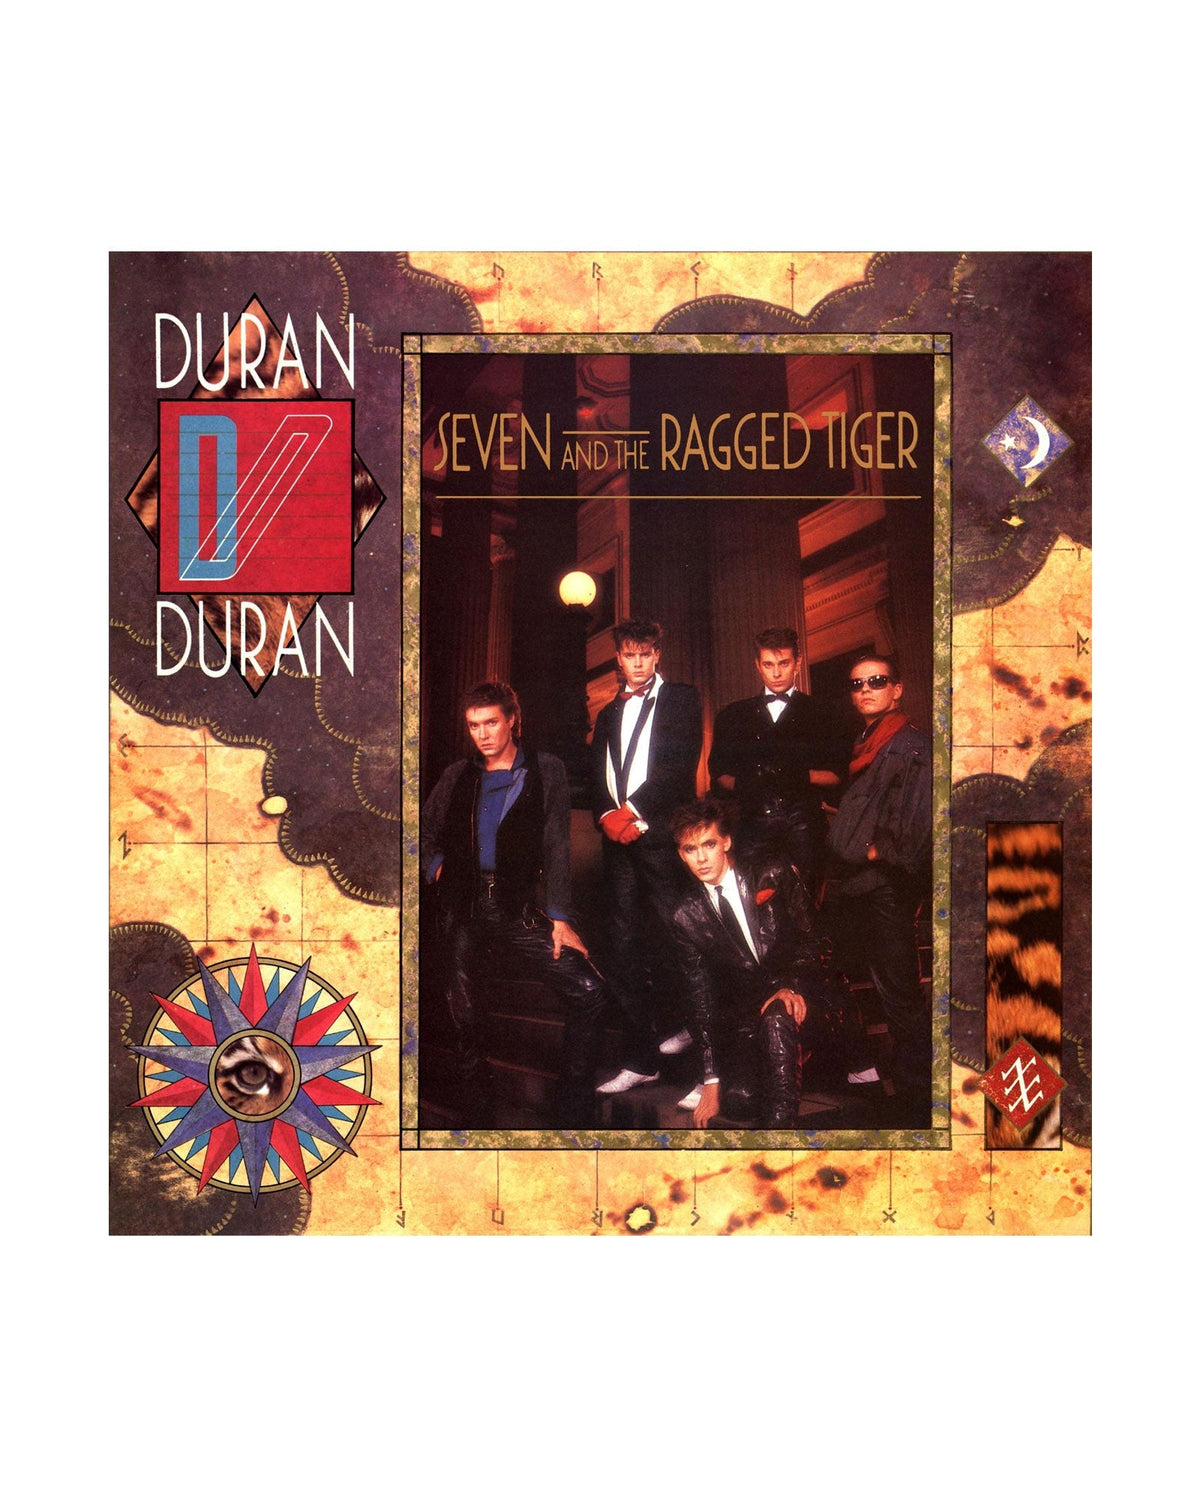 Duran Duran - LP Vinilo "Seven And The Ragged Tiger" - D2fy · Rocktud - D2fy